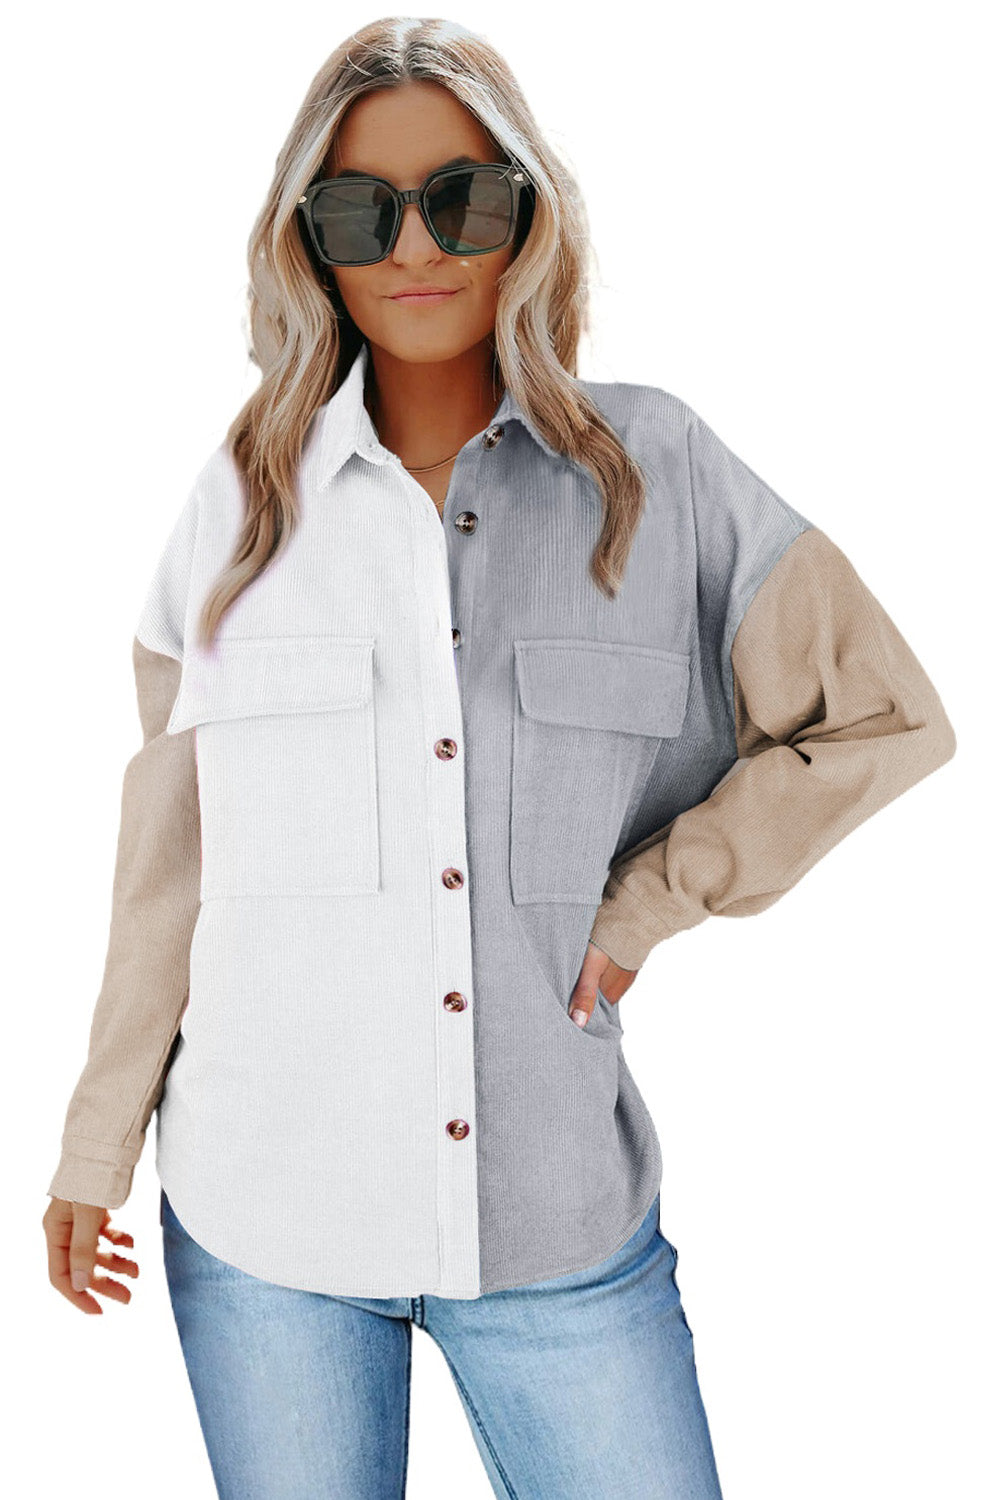 LC2551387-1-S, LC2551387-1-M, LC2551387-1-L, LC2551387-1-XL, LC2551387-1-2XL, LC2551387-1-3XL, White Women Oversized Shirts Color Block Button Shacket Jacket